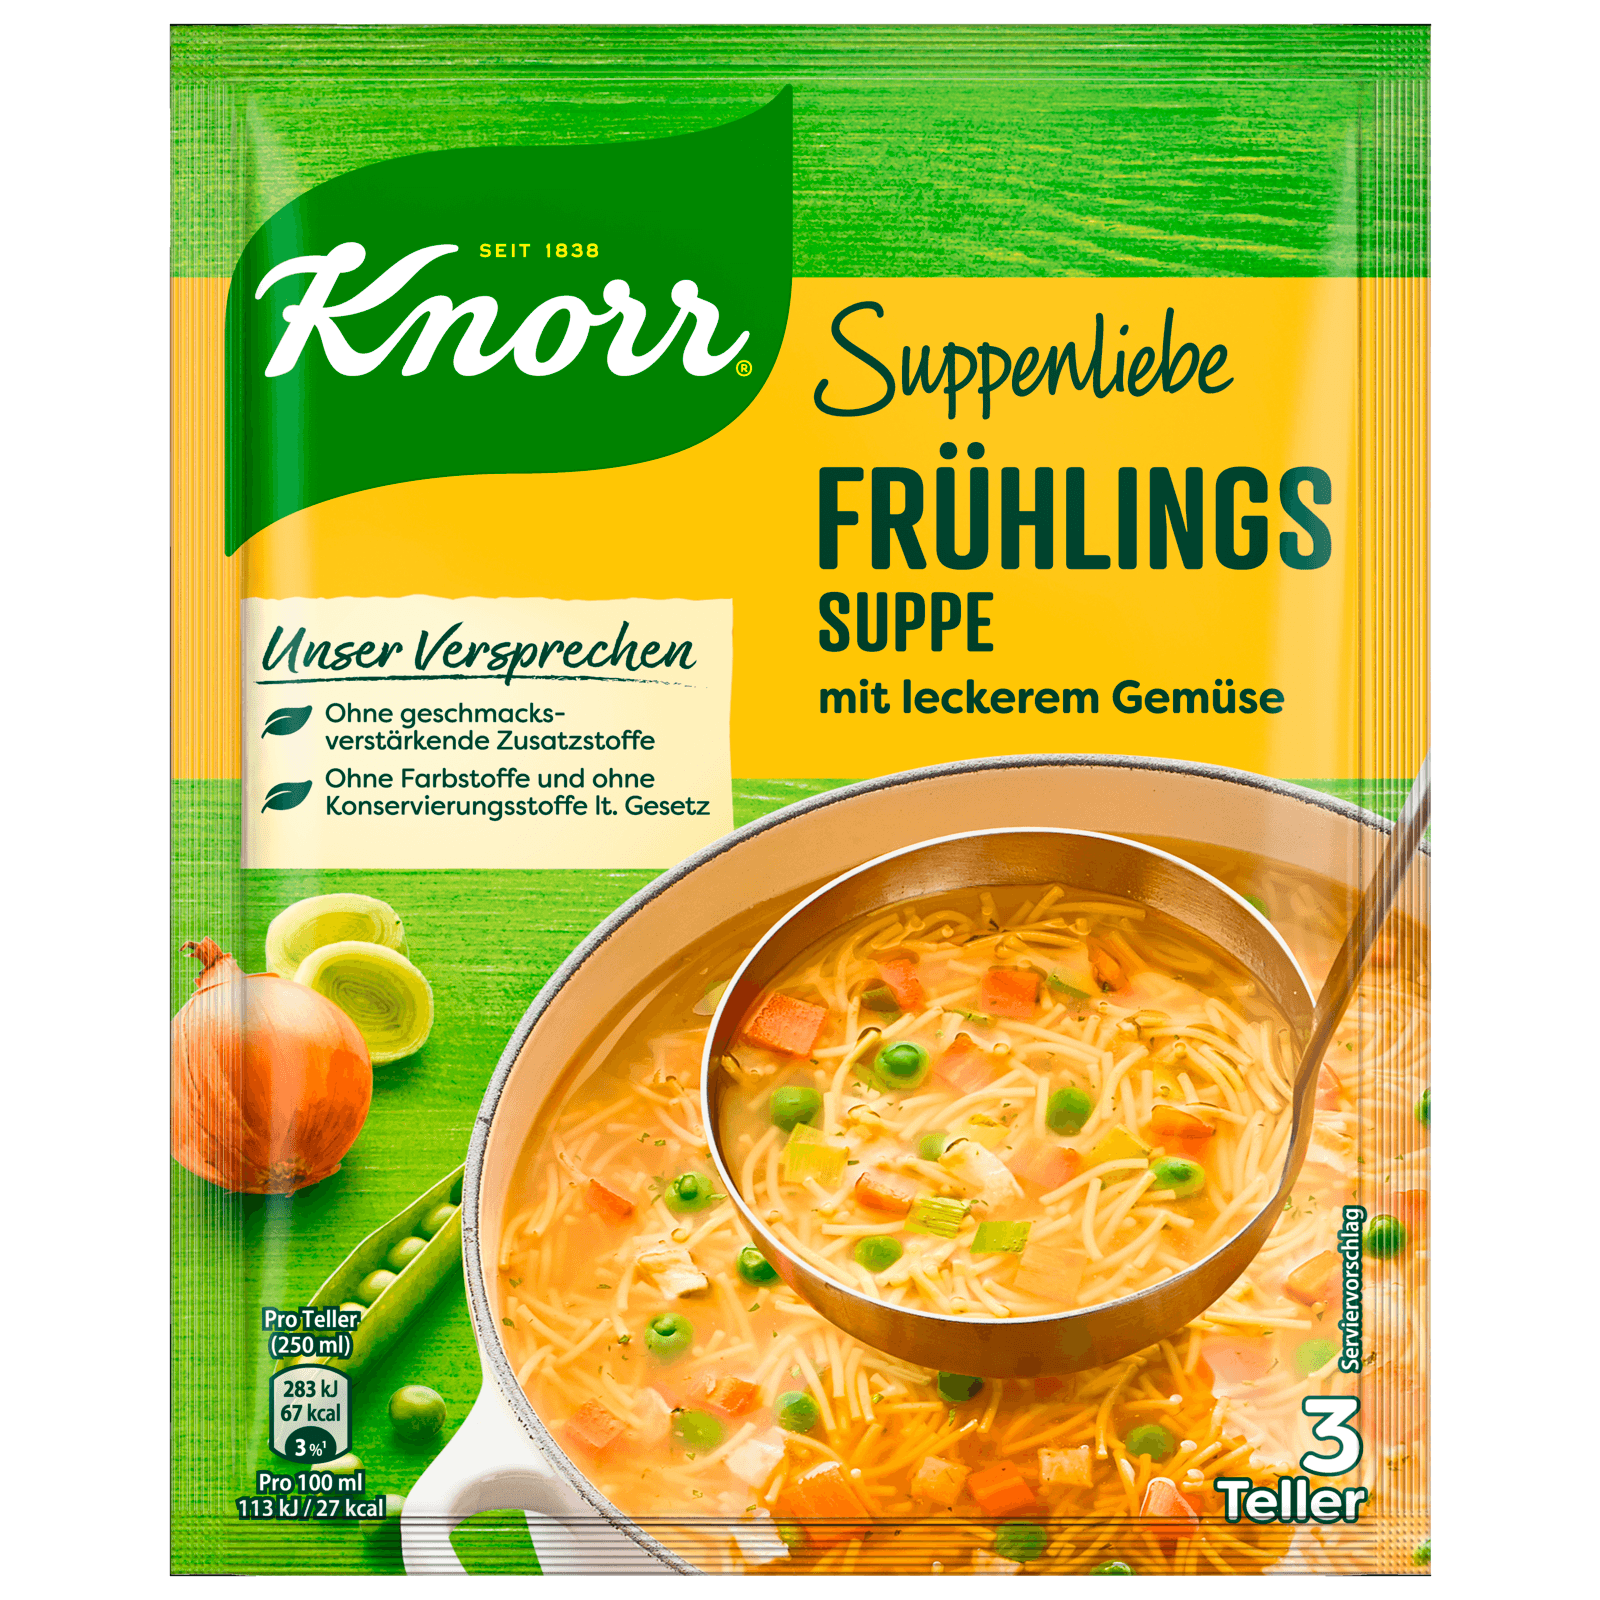 Knorr Suppenliebe Frühlings bestellen! bei Teller 3 online REWE Suppe